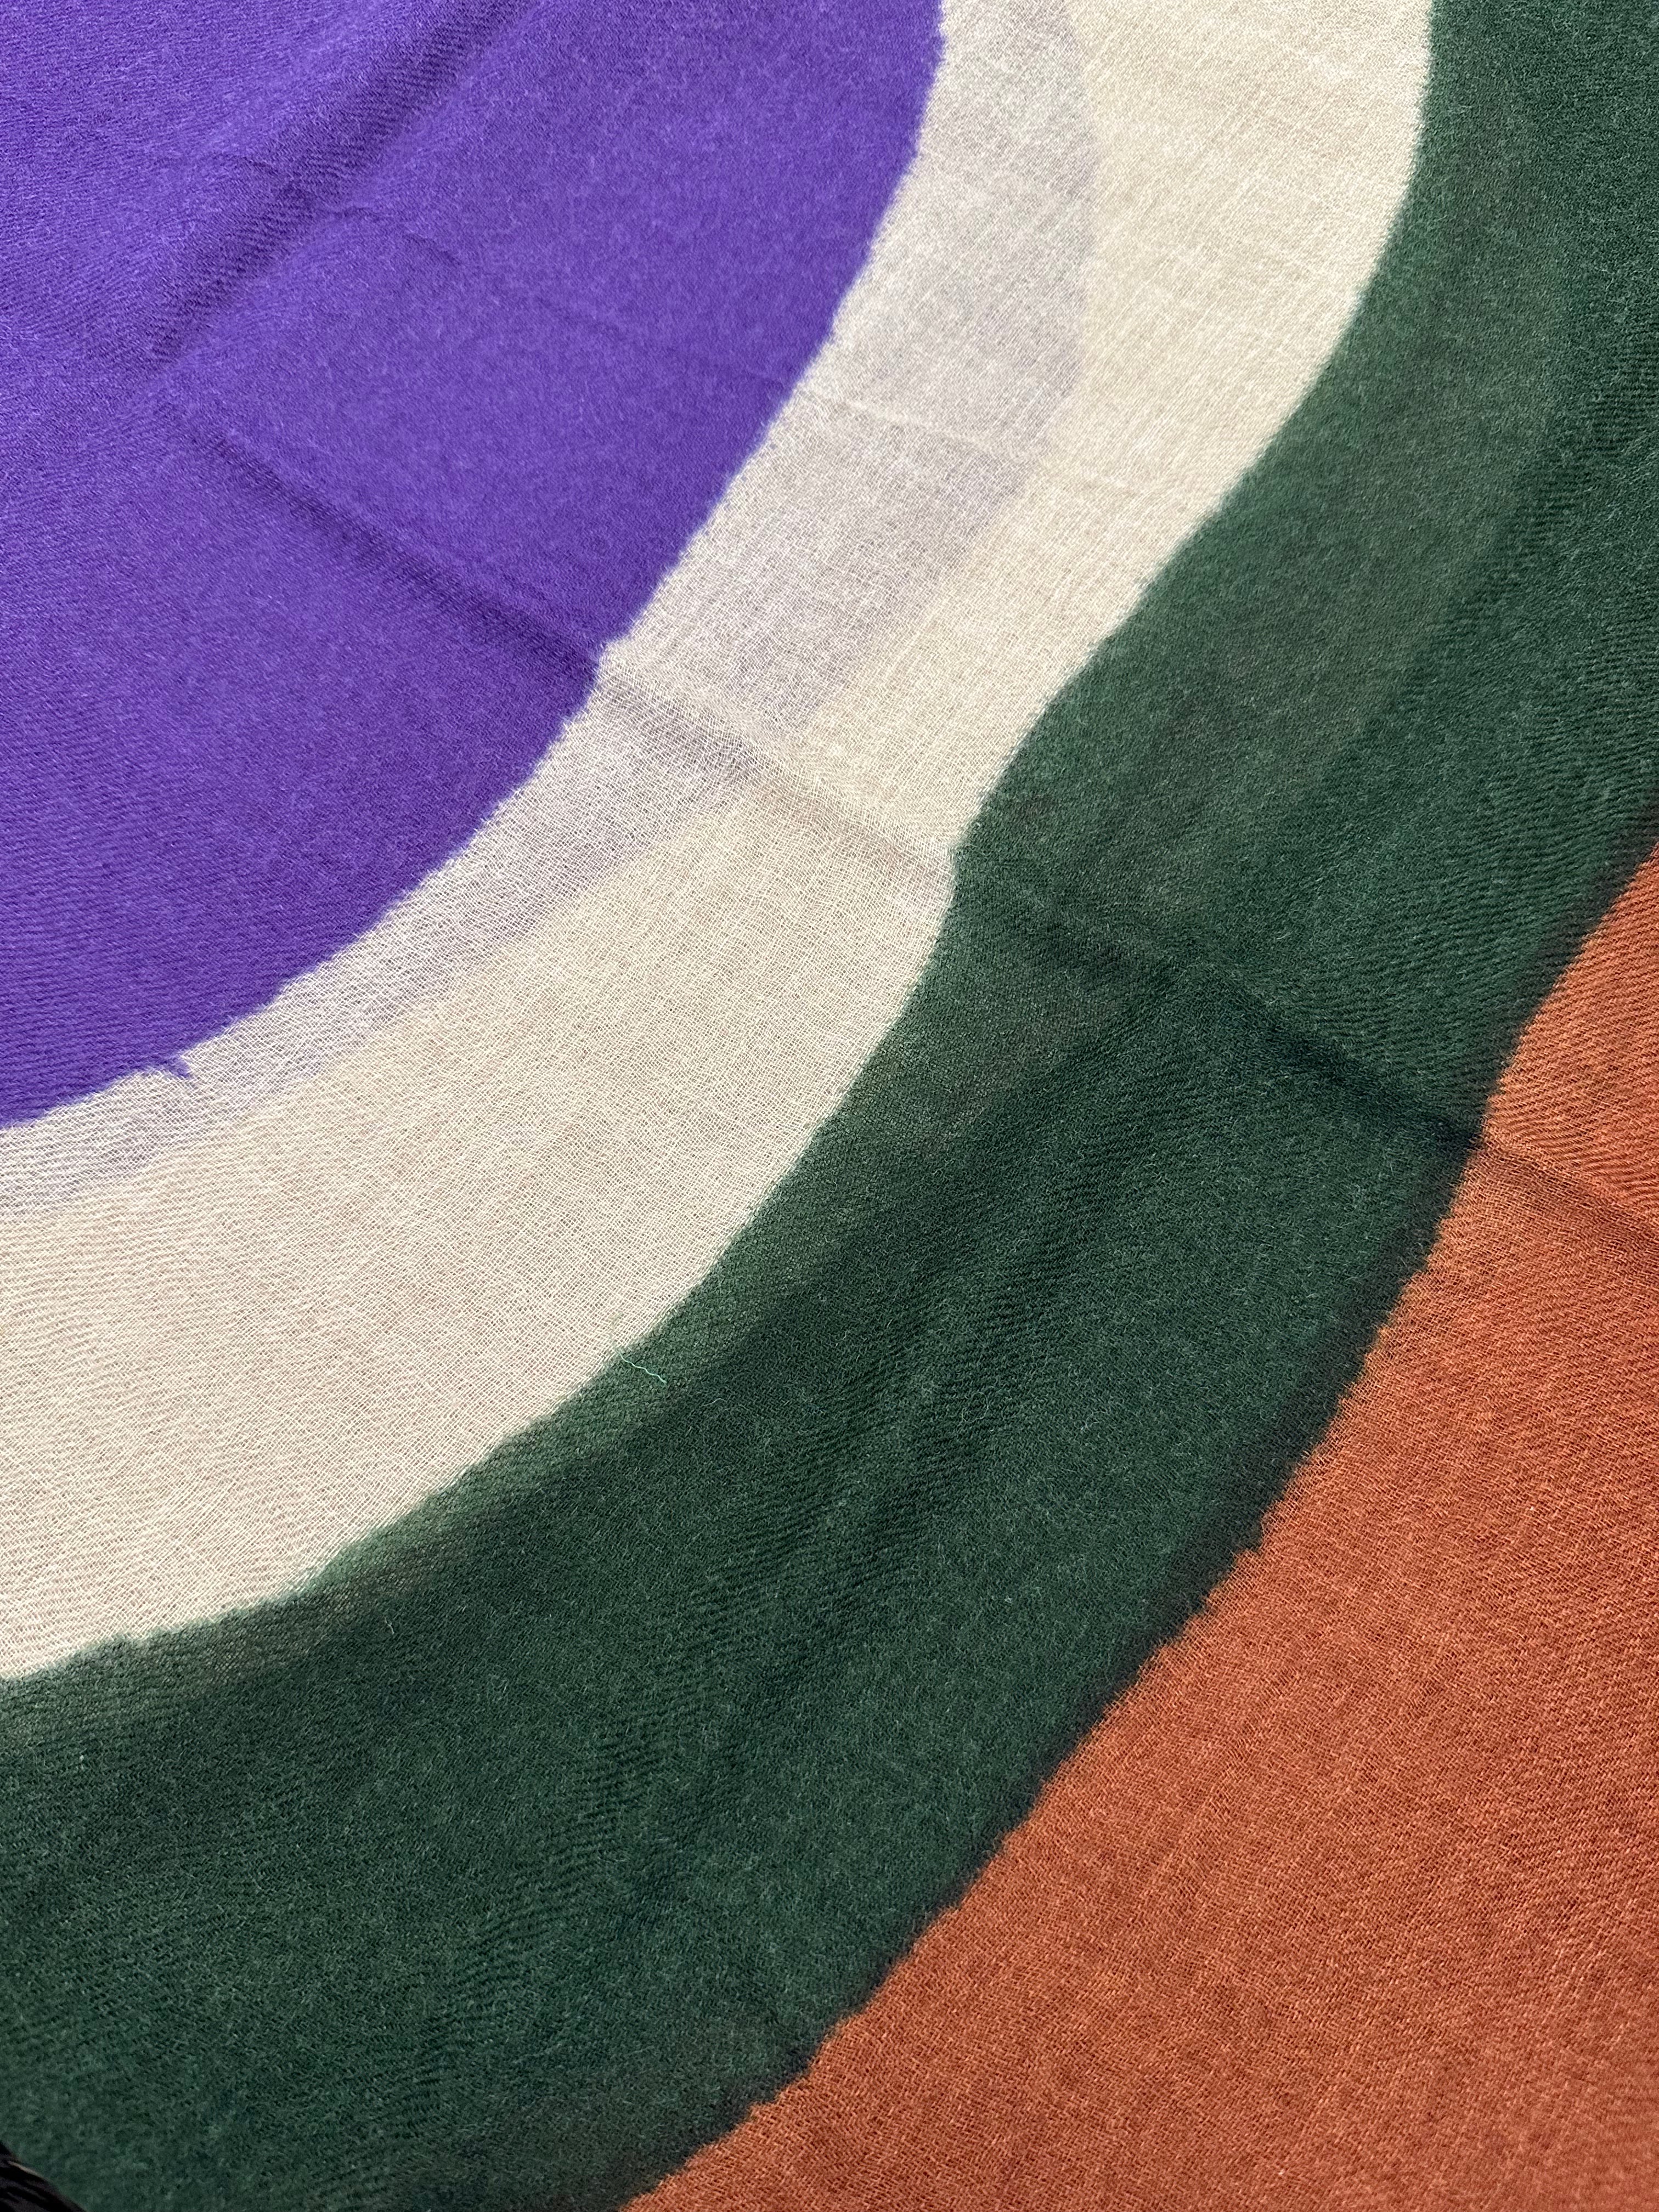 Sciarpa lana fantasia geometrica verde marrone beige viola dipinta a mano Franco Bassi